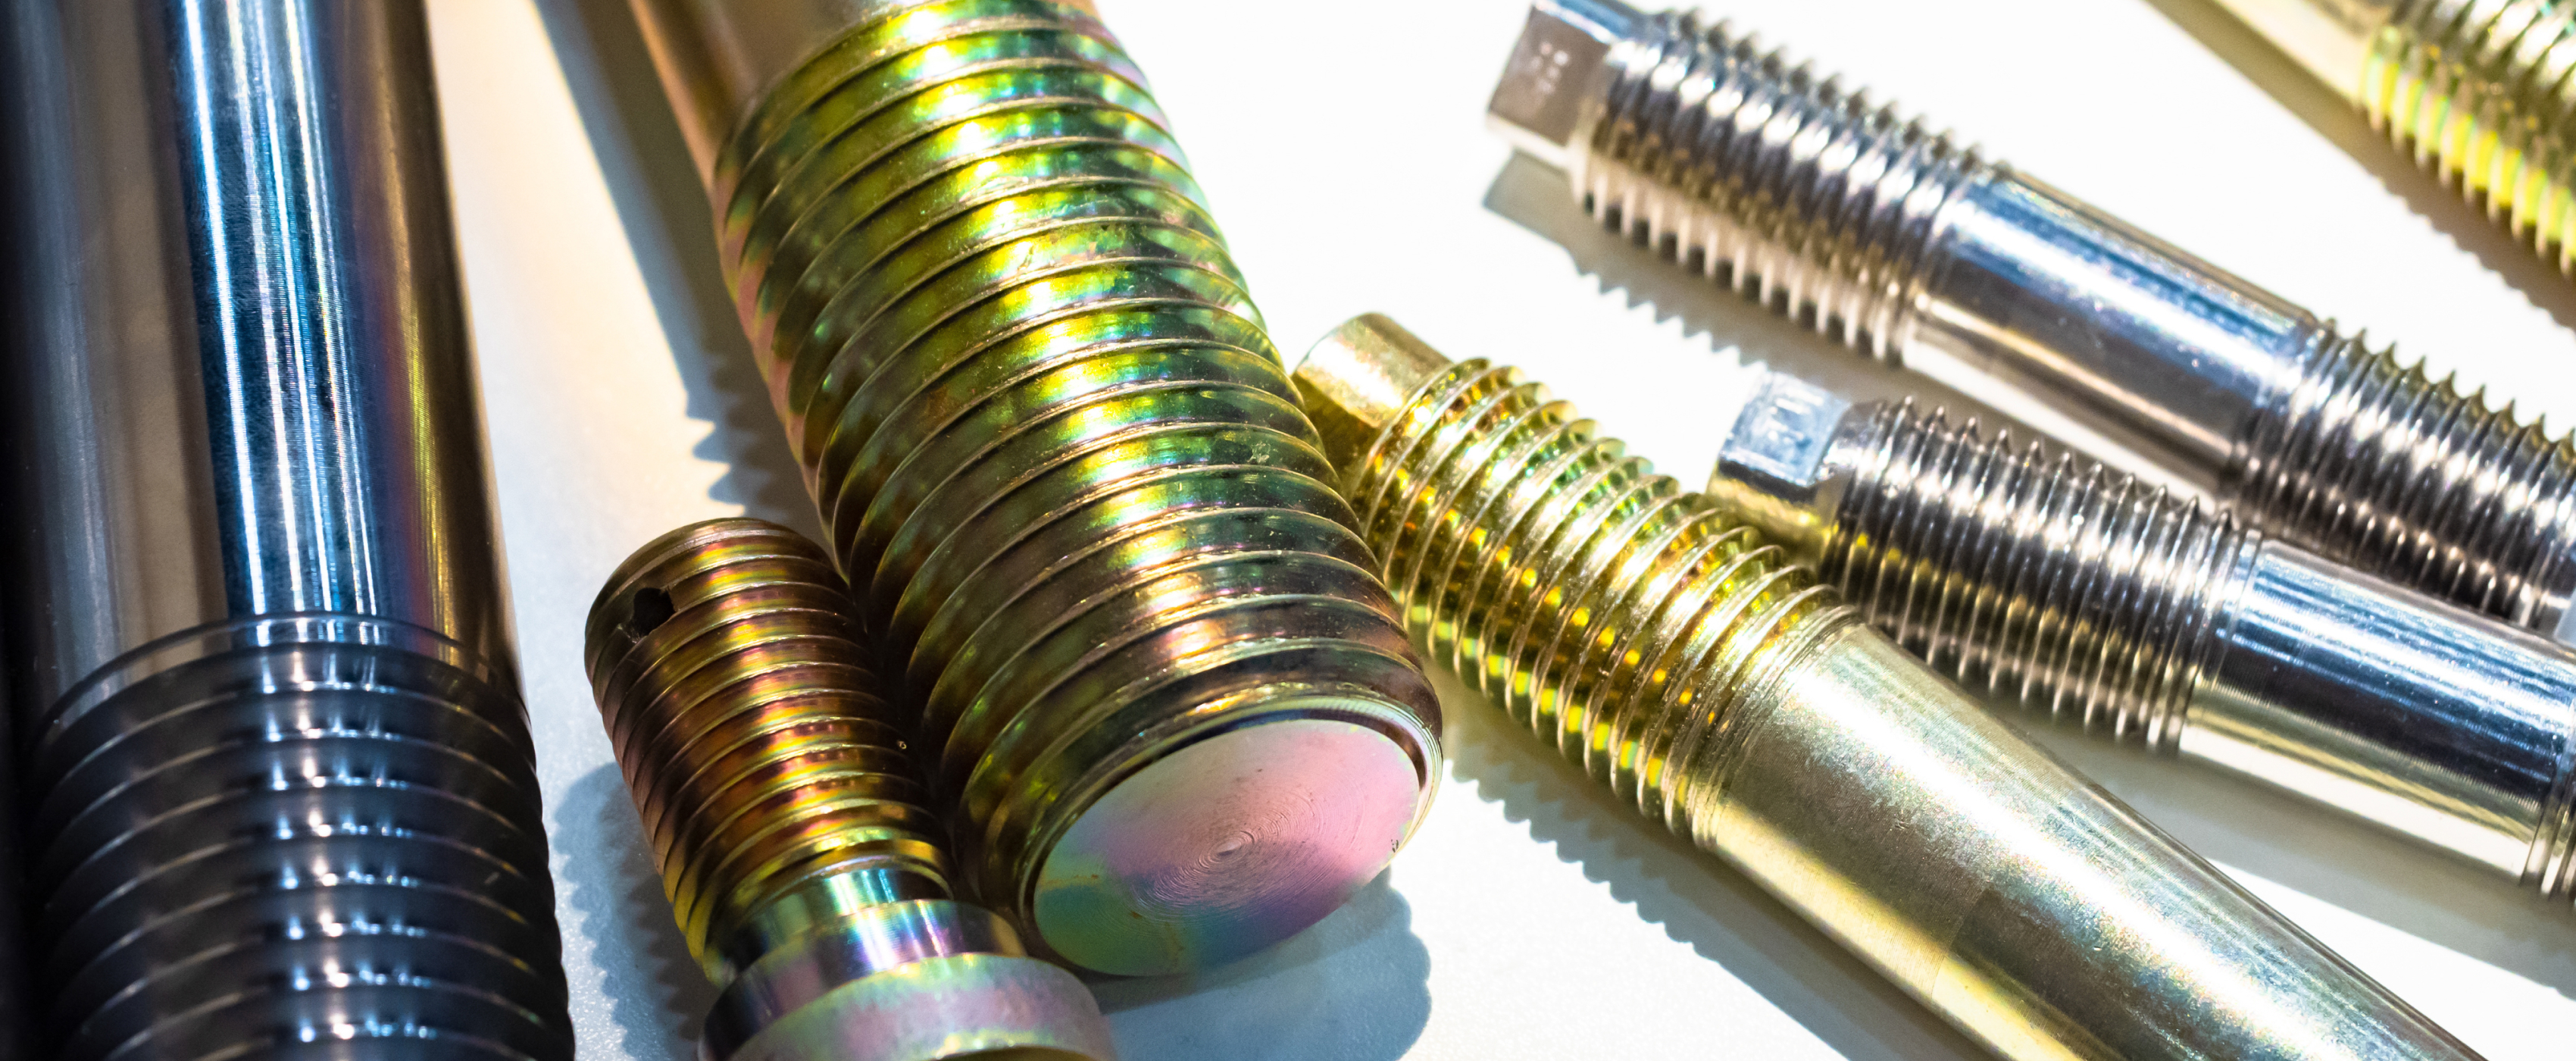 close up image of screws